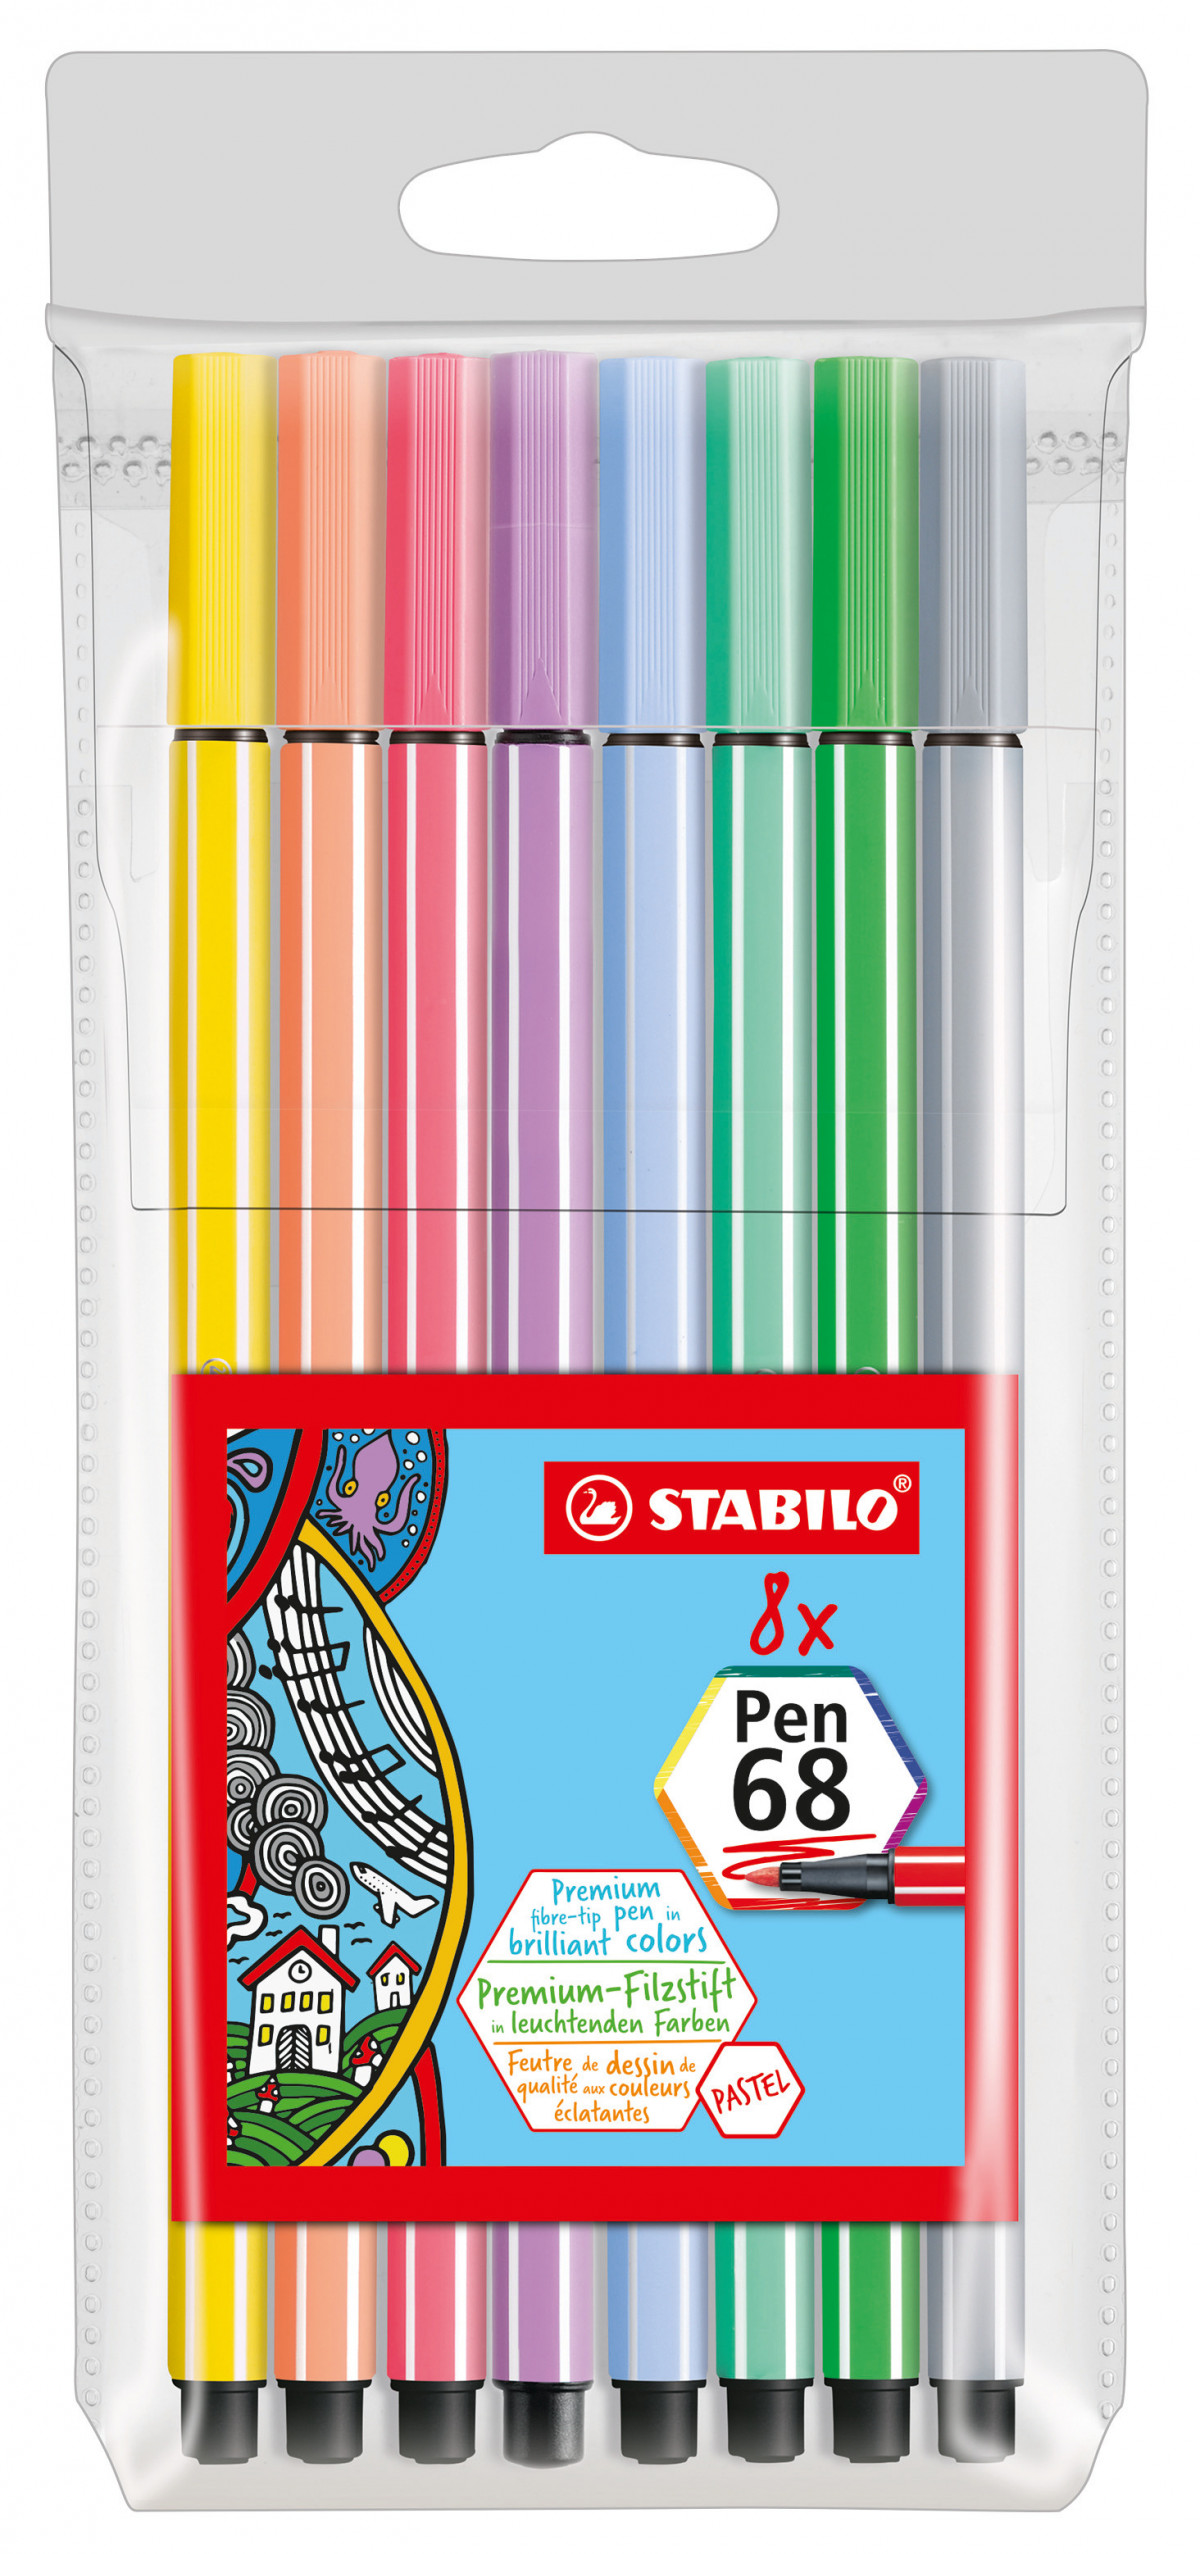 STABILO Pen 68, Metallic Set of 8